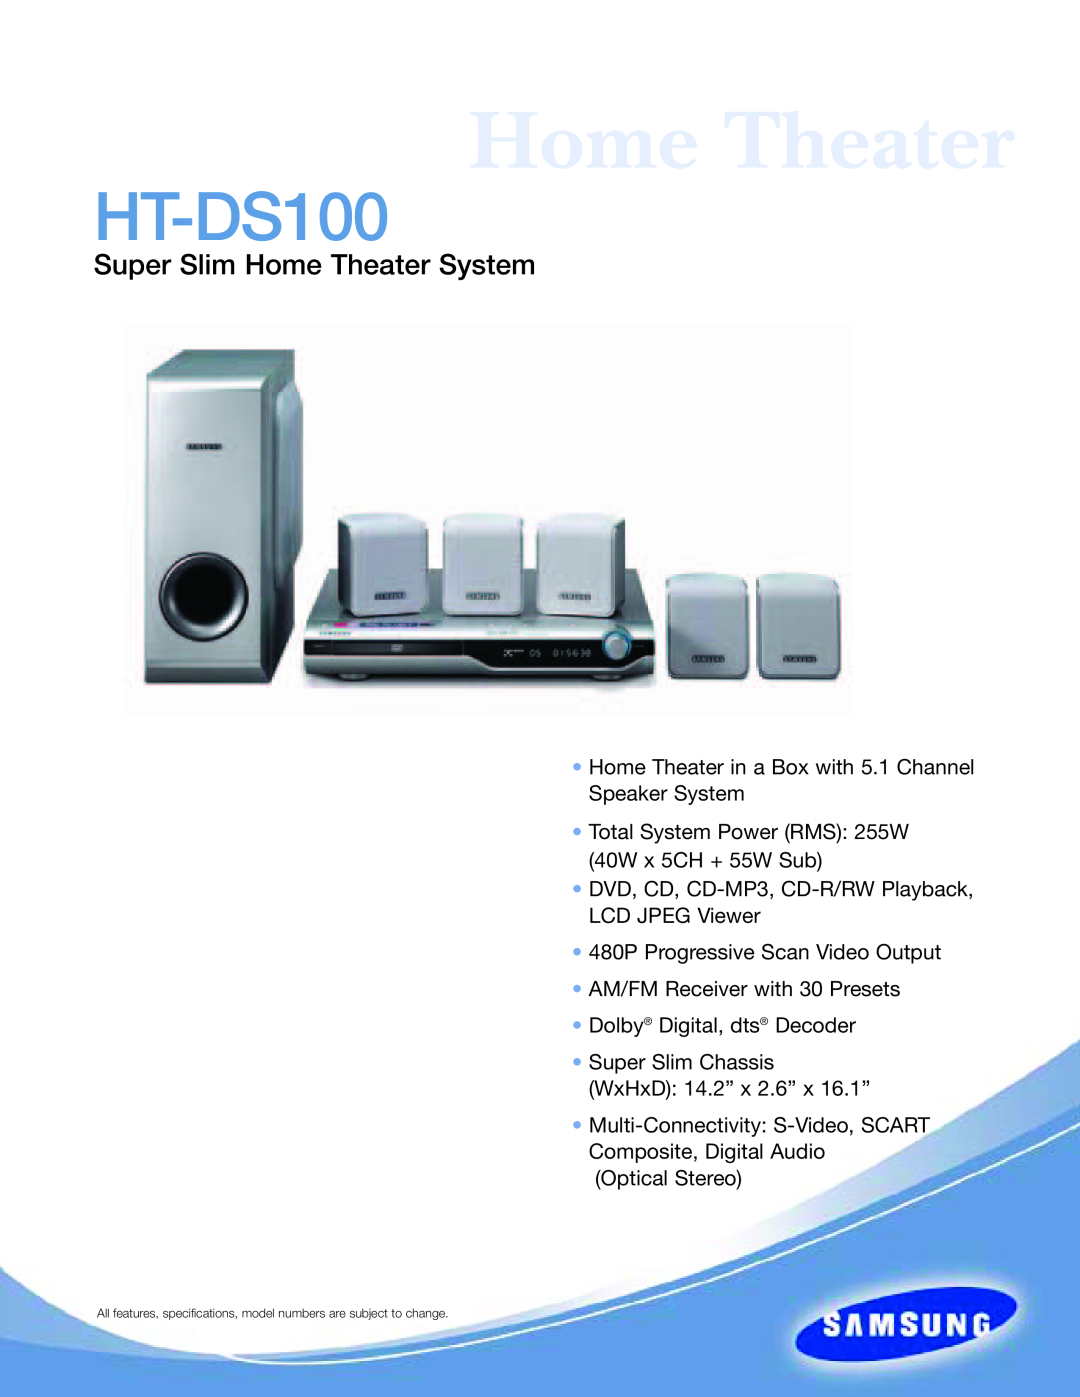 Samsung manual 삼성 오디오 홈페이지, 본 제품은 220V 전용 제품입니다, HT-DS100 HT-DS103T HT-DS105T 